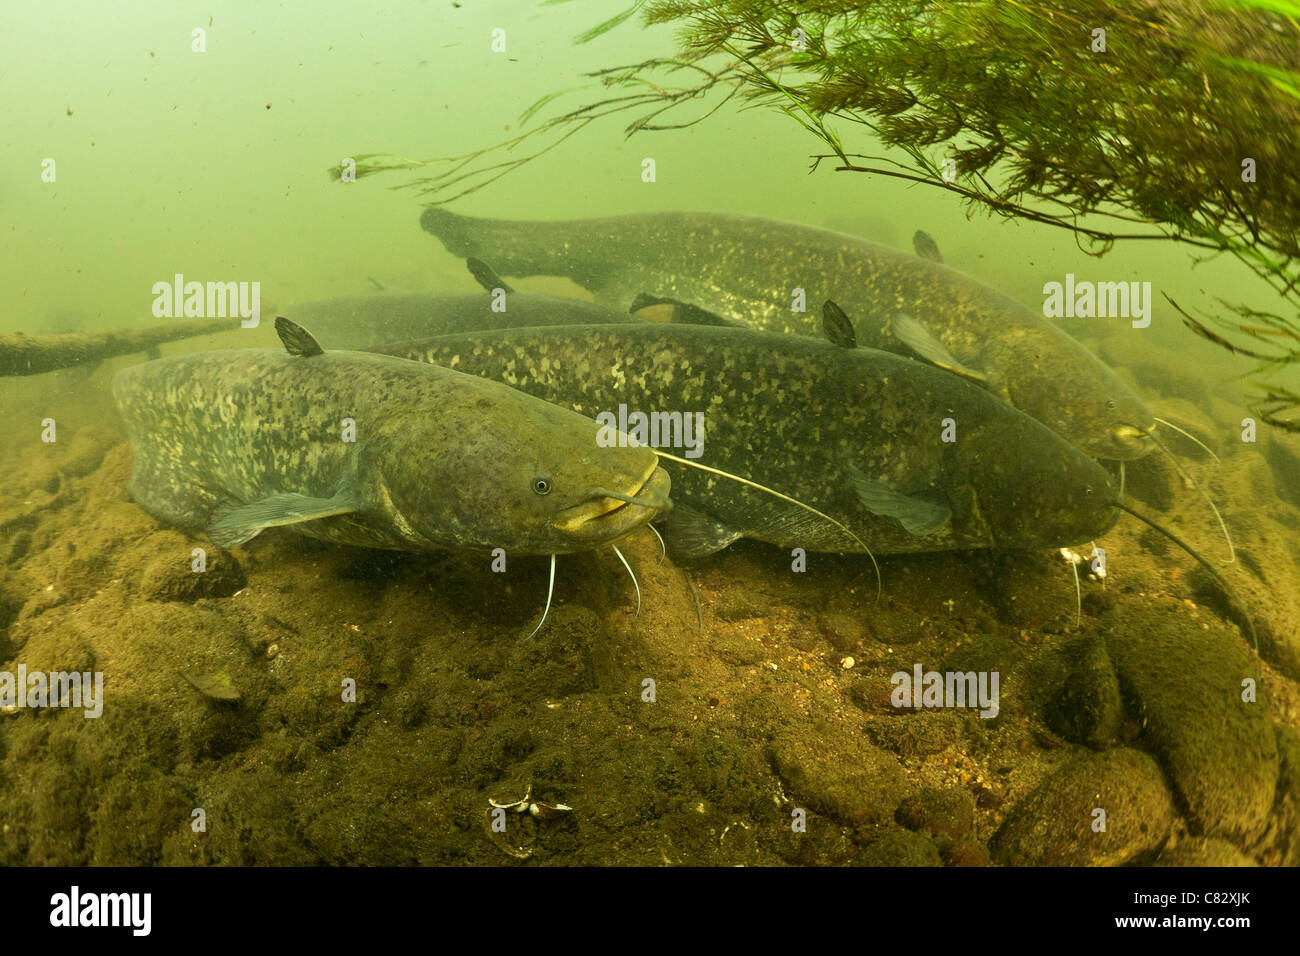 Wels catfish (Silurus glanis) in their natural surroundings